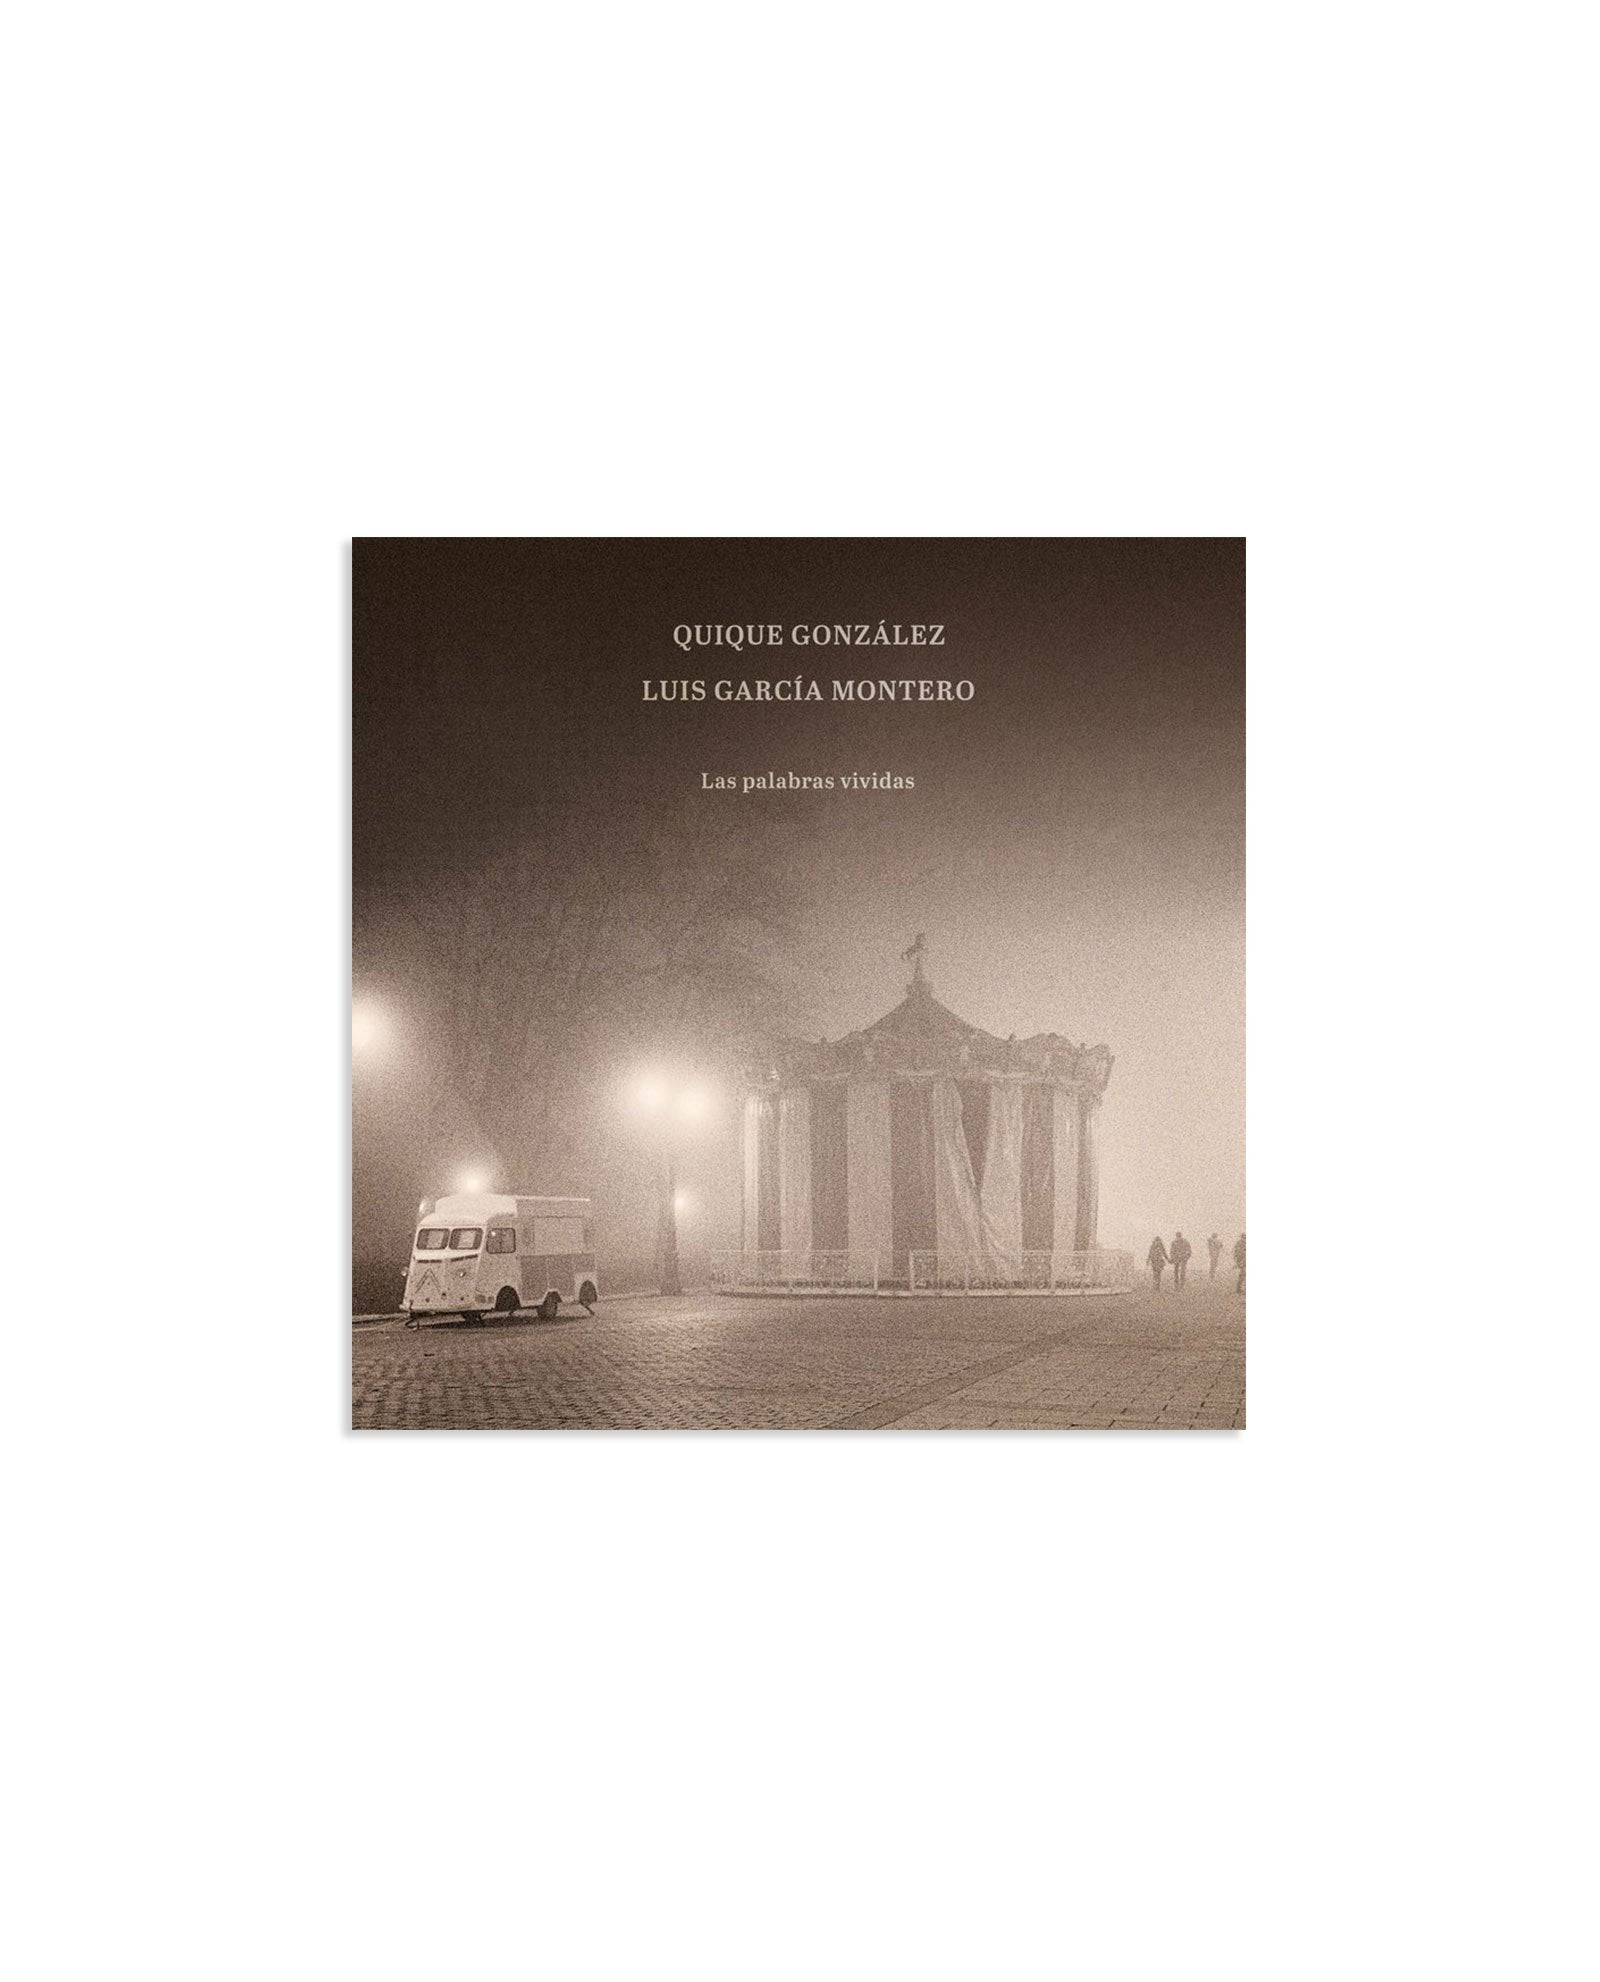 Quique González - LAS PALABRAS VIVIDAS (VARSOVIA RECORDS / Cultura Rock Records, 2019) - Rocktud - Quique González